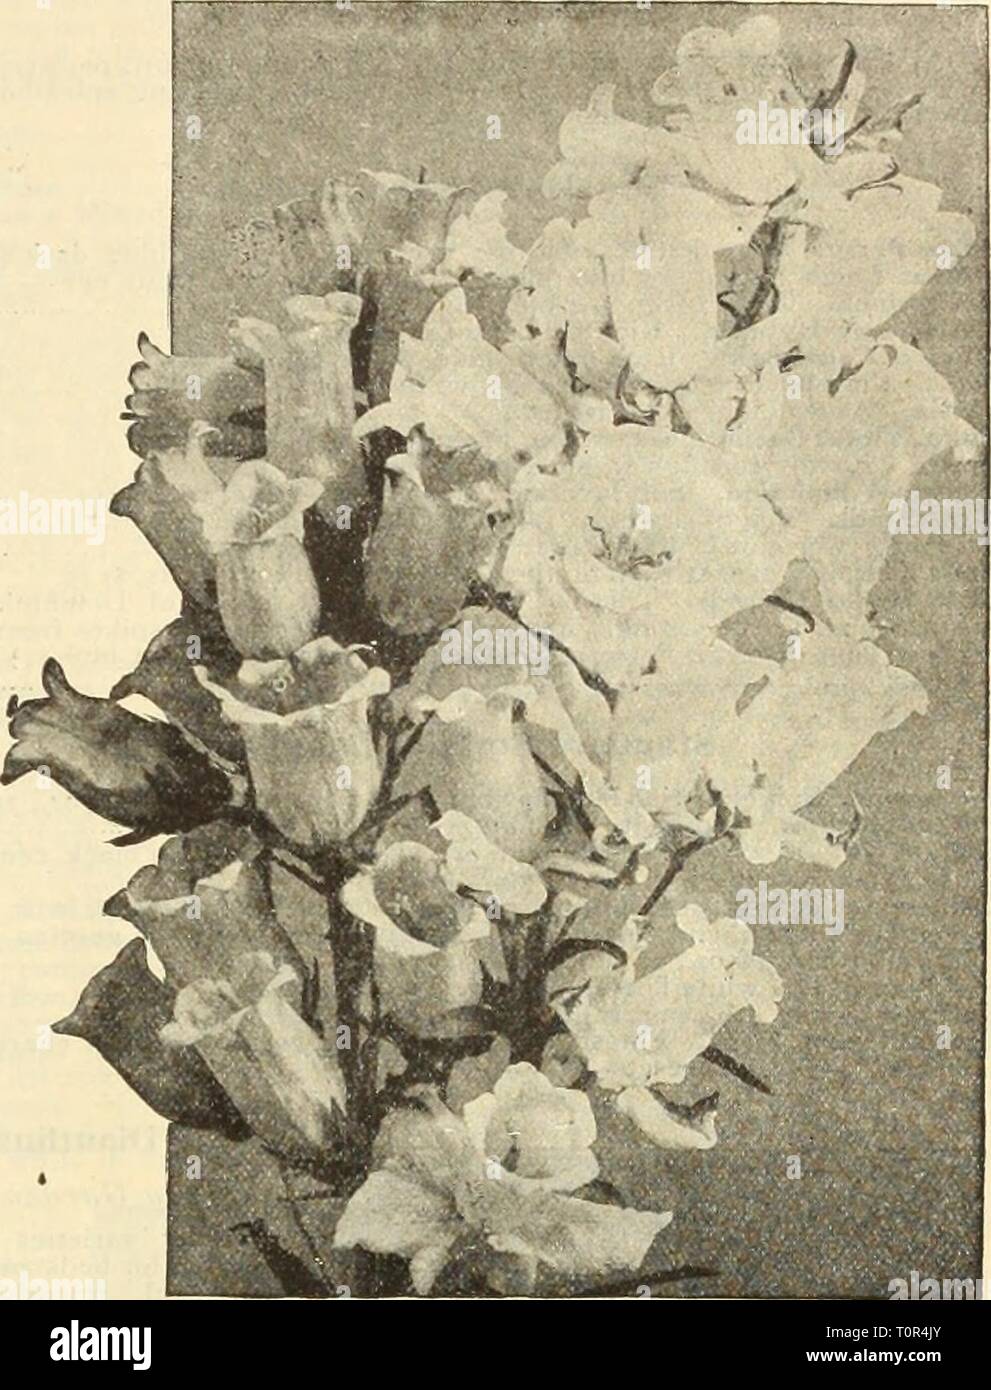 Dreer's autumn catalogue 1912 (1912) Dreer's autumn catalogue 1912  dreersautumncata1912henr Year: 1912  UlNRrADREER -PHILADELPHIAJ'A-^ RtLIABlE FLOWER SefDrflfH 65 Campanula (Bellflower). Per Pkt Carpatica {Carpathian Hare-Bull). In bloom the whole season; hardy perennial: blue: 6 inches. Per ^4 oz., 25 cts â â Alba. White flowered form. Per Vt, oz.. 25 cts â GyamKTaX&'Clustered Bellfloiv/r). Violet blue i; Grandis (Great Belifloiver). Large saucer-shaped violet blue flowers ic Latifolia Macrantha. .^ handsome variety, bearing in May and June large purplish-blue flowers. 3 feet PersiciJFolia  Stock Photo